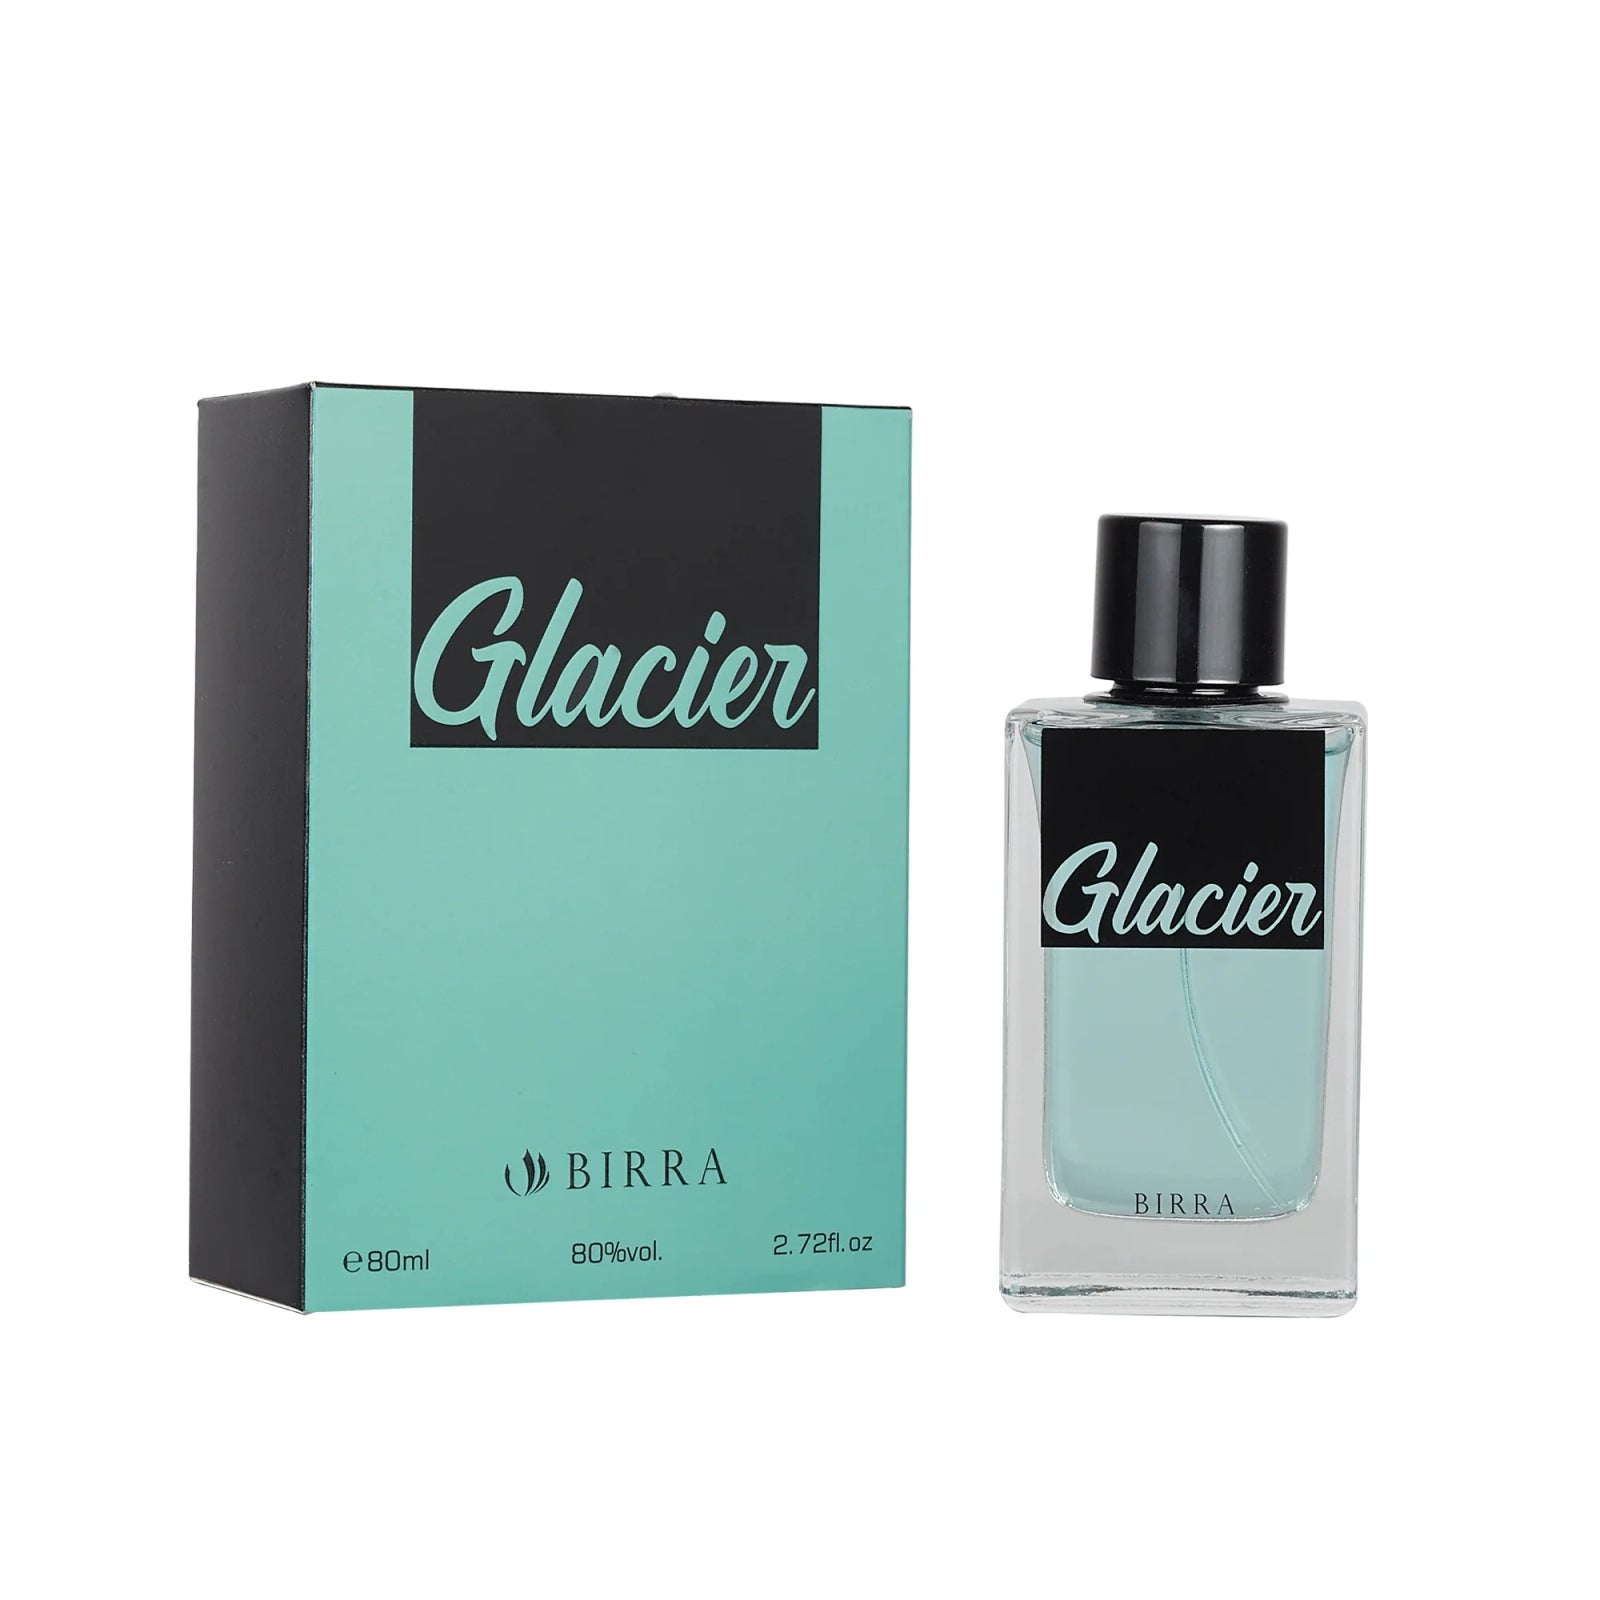 Glacier EDP 80ml-Premium Perfume